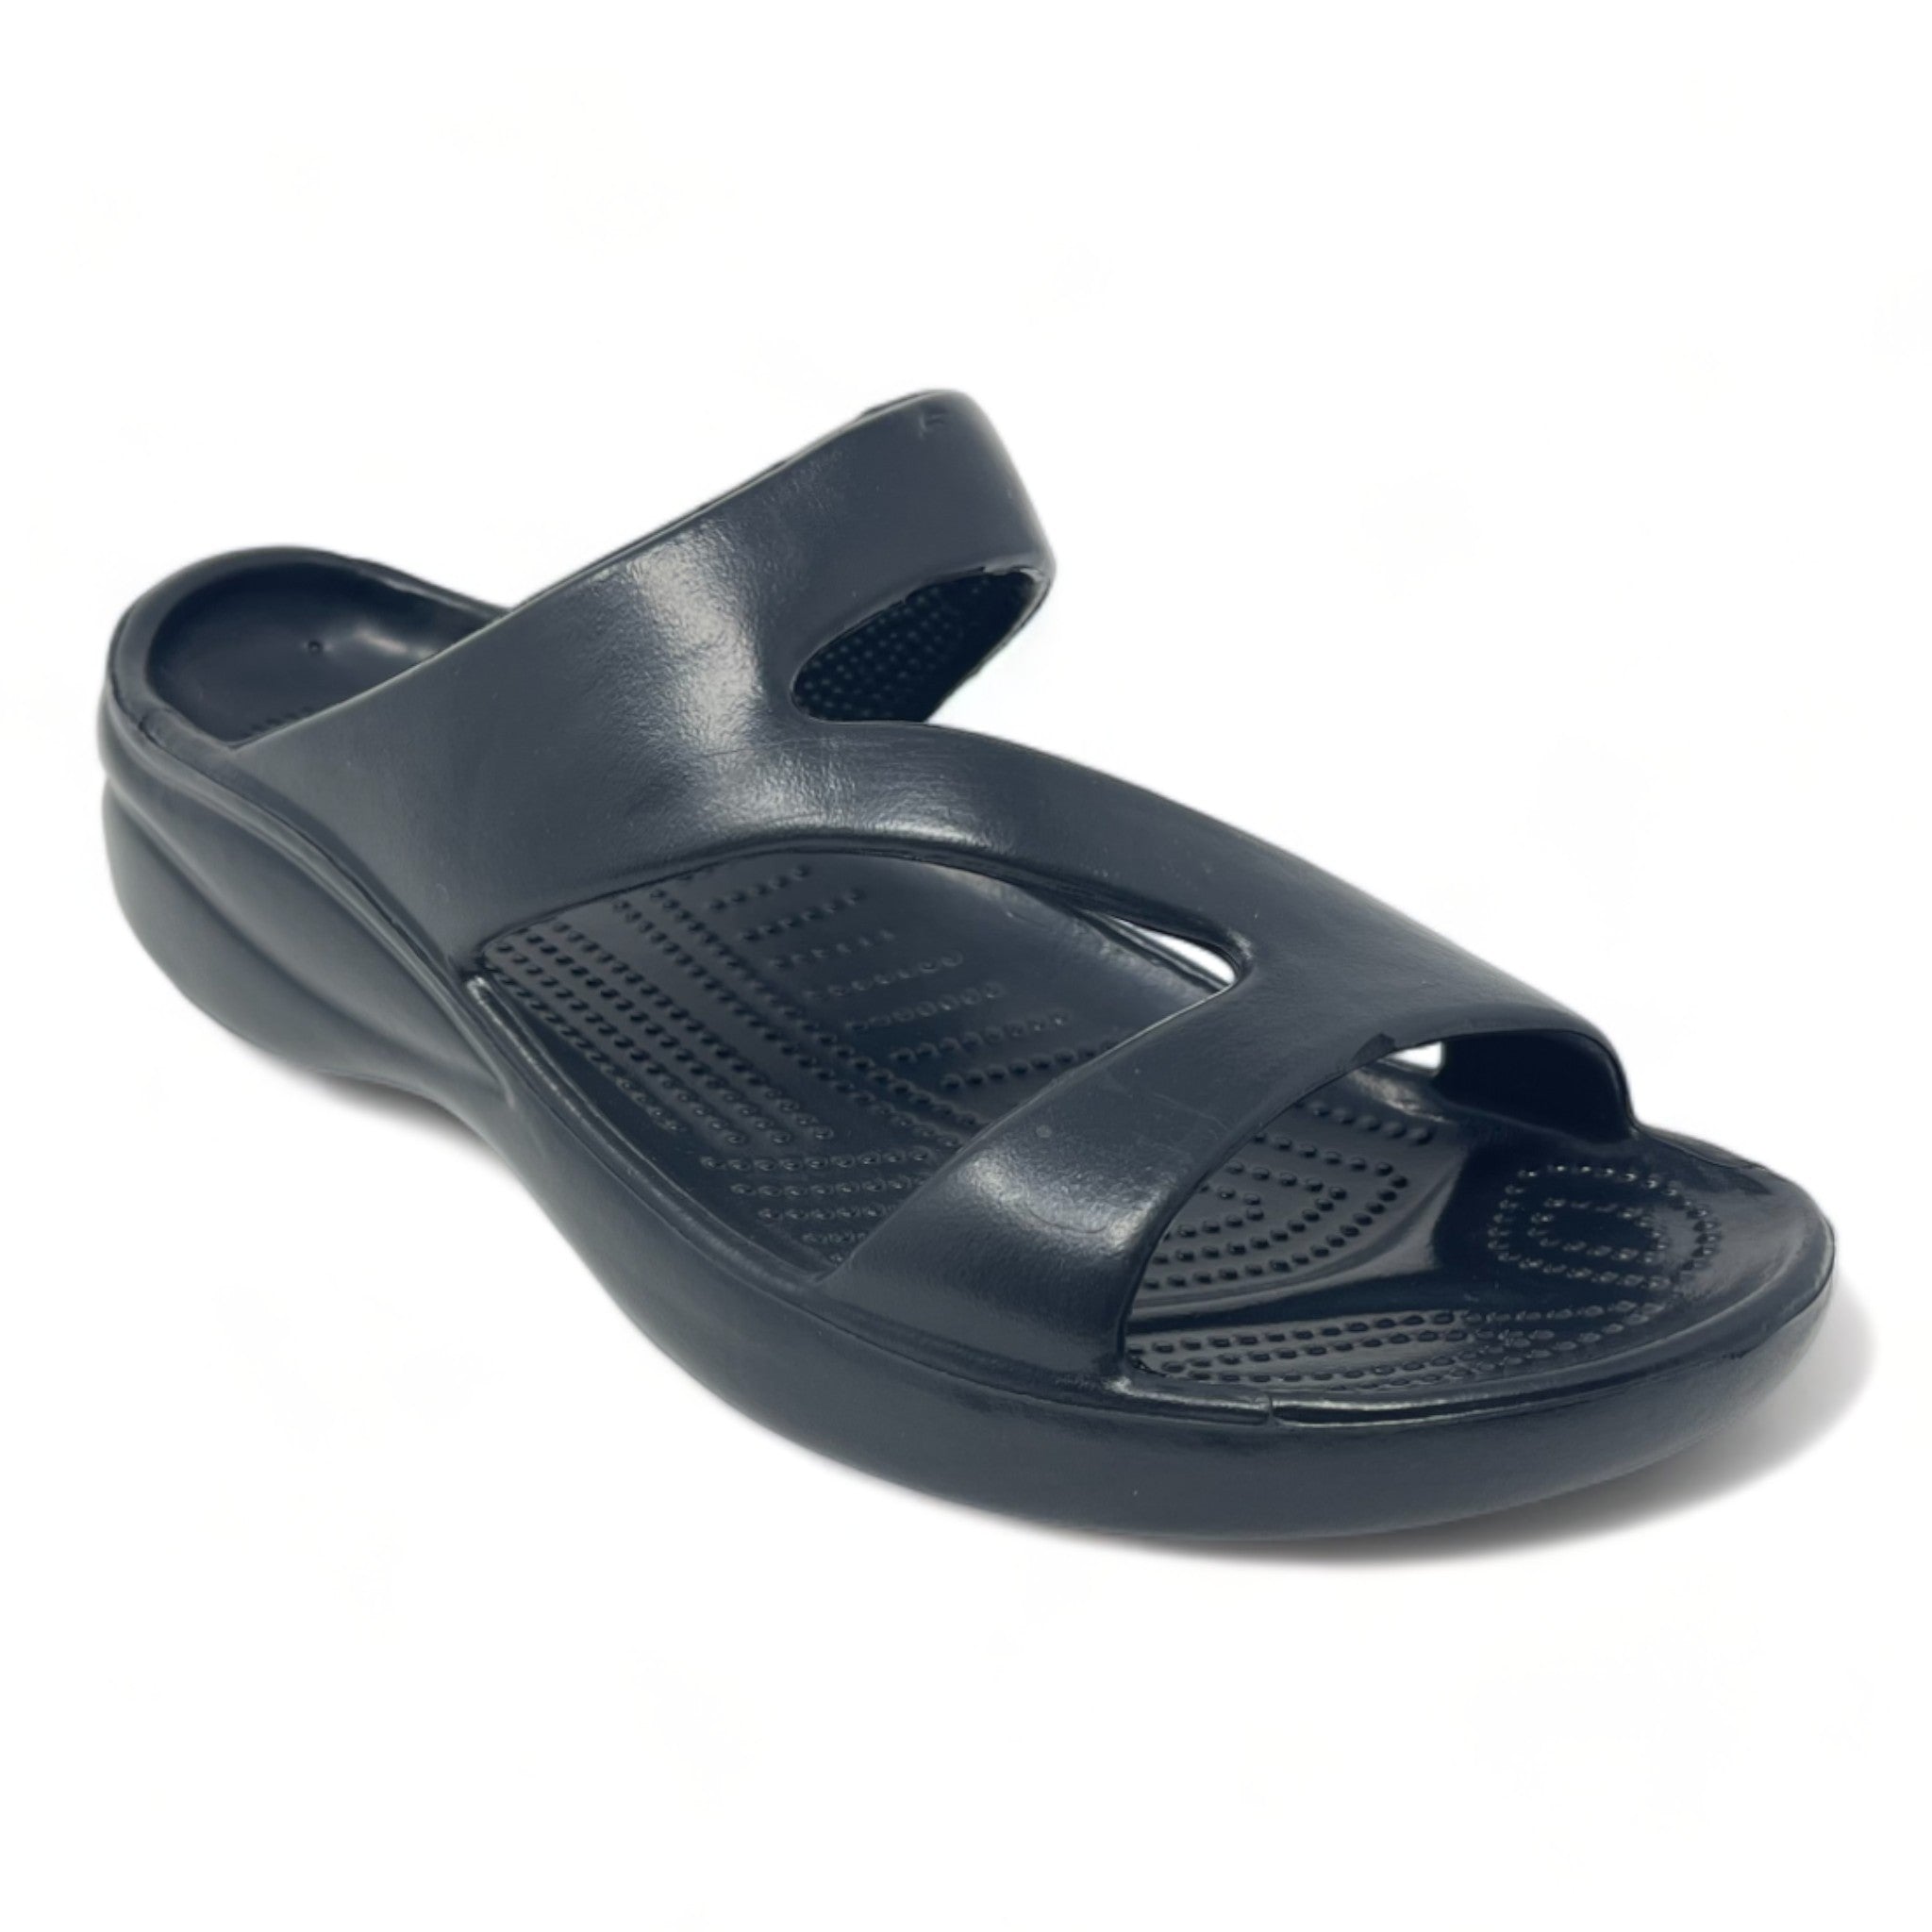 Women's Z Sandals - Black DAWGS USA